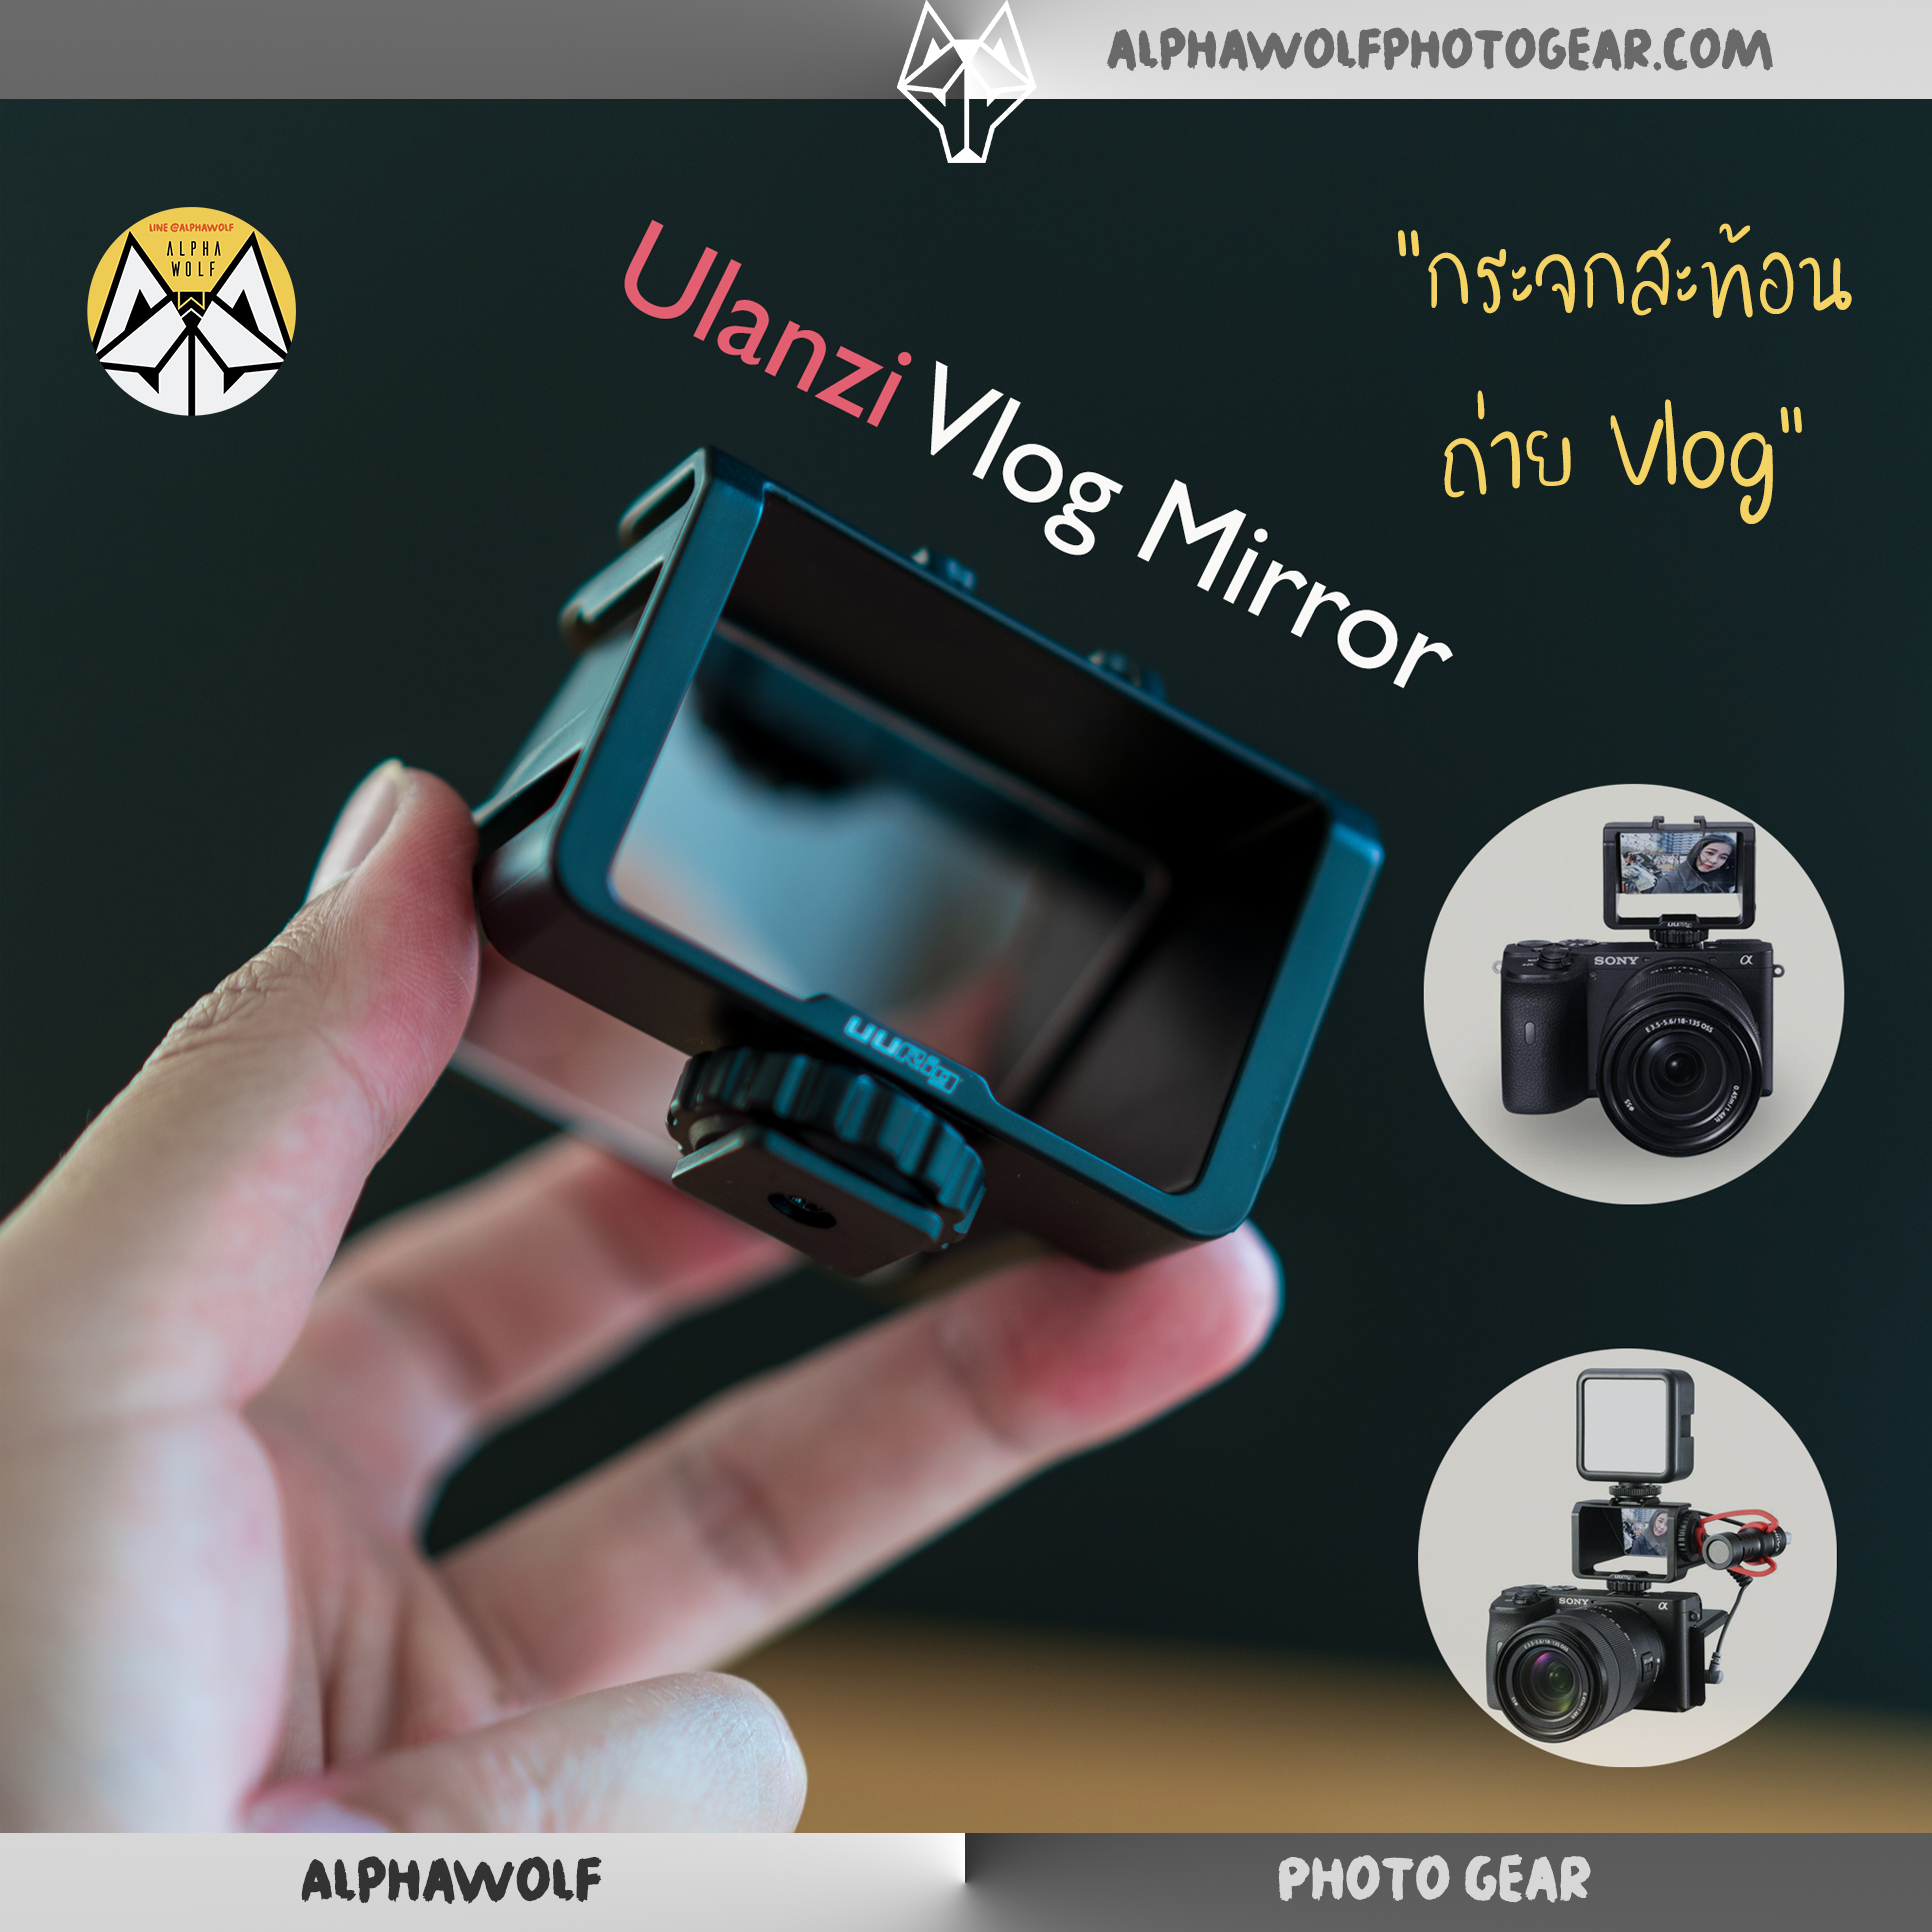 Ulanzi R031 Vlog Mirror กระจกสะท้อนจอ LCD งานถ่ายวีดีโอคนเดียว Vlog Youtube ไลฟ์สด สำหรับกล้องจอ Tilt Screen Sony A6000 A6300 A6500 A7ii A7iii Fuji XT2 XT3 XT20 XT30 Nikon Z6 Z7 /ALPHAWOLF